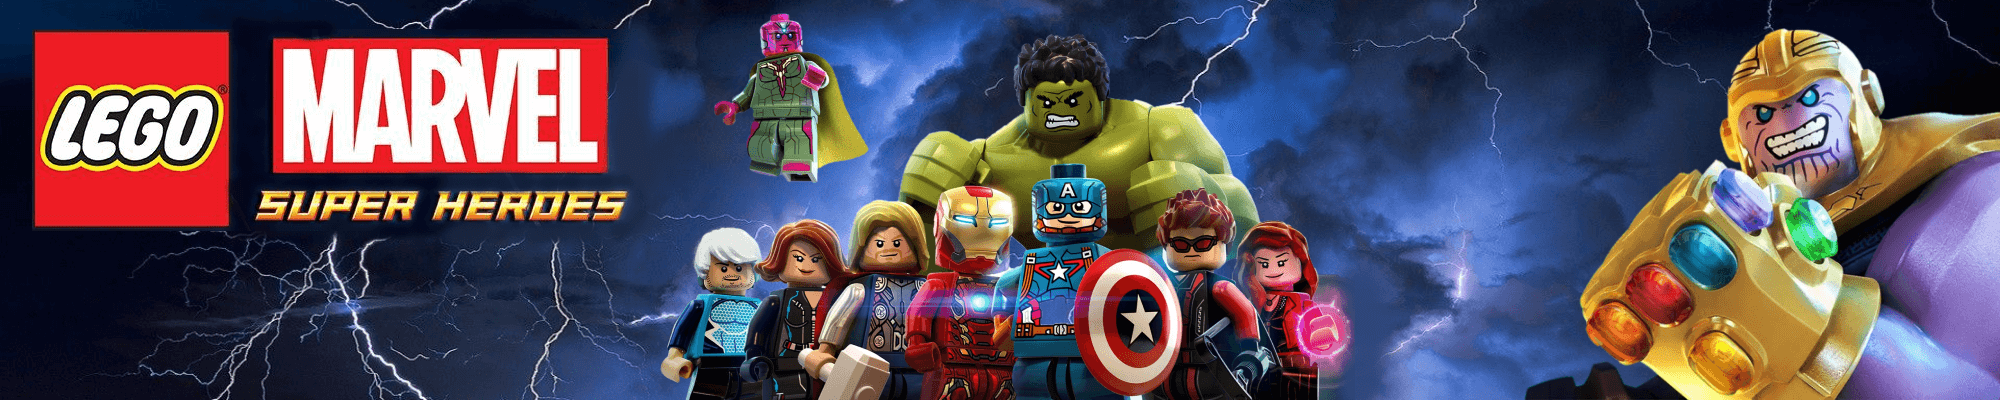 LEGO Marvel Super Heroes NZ